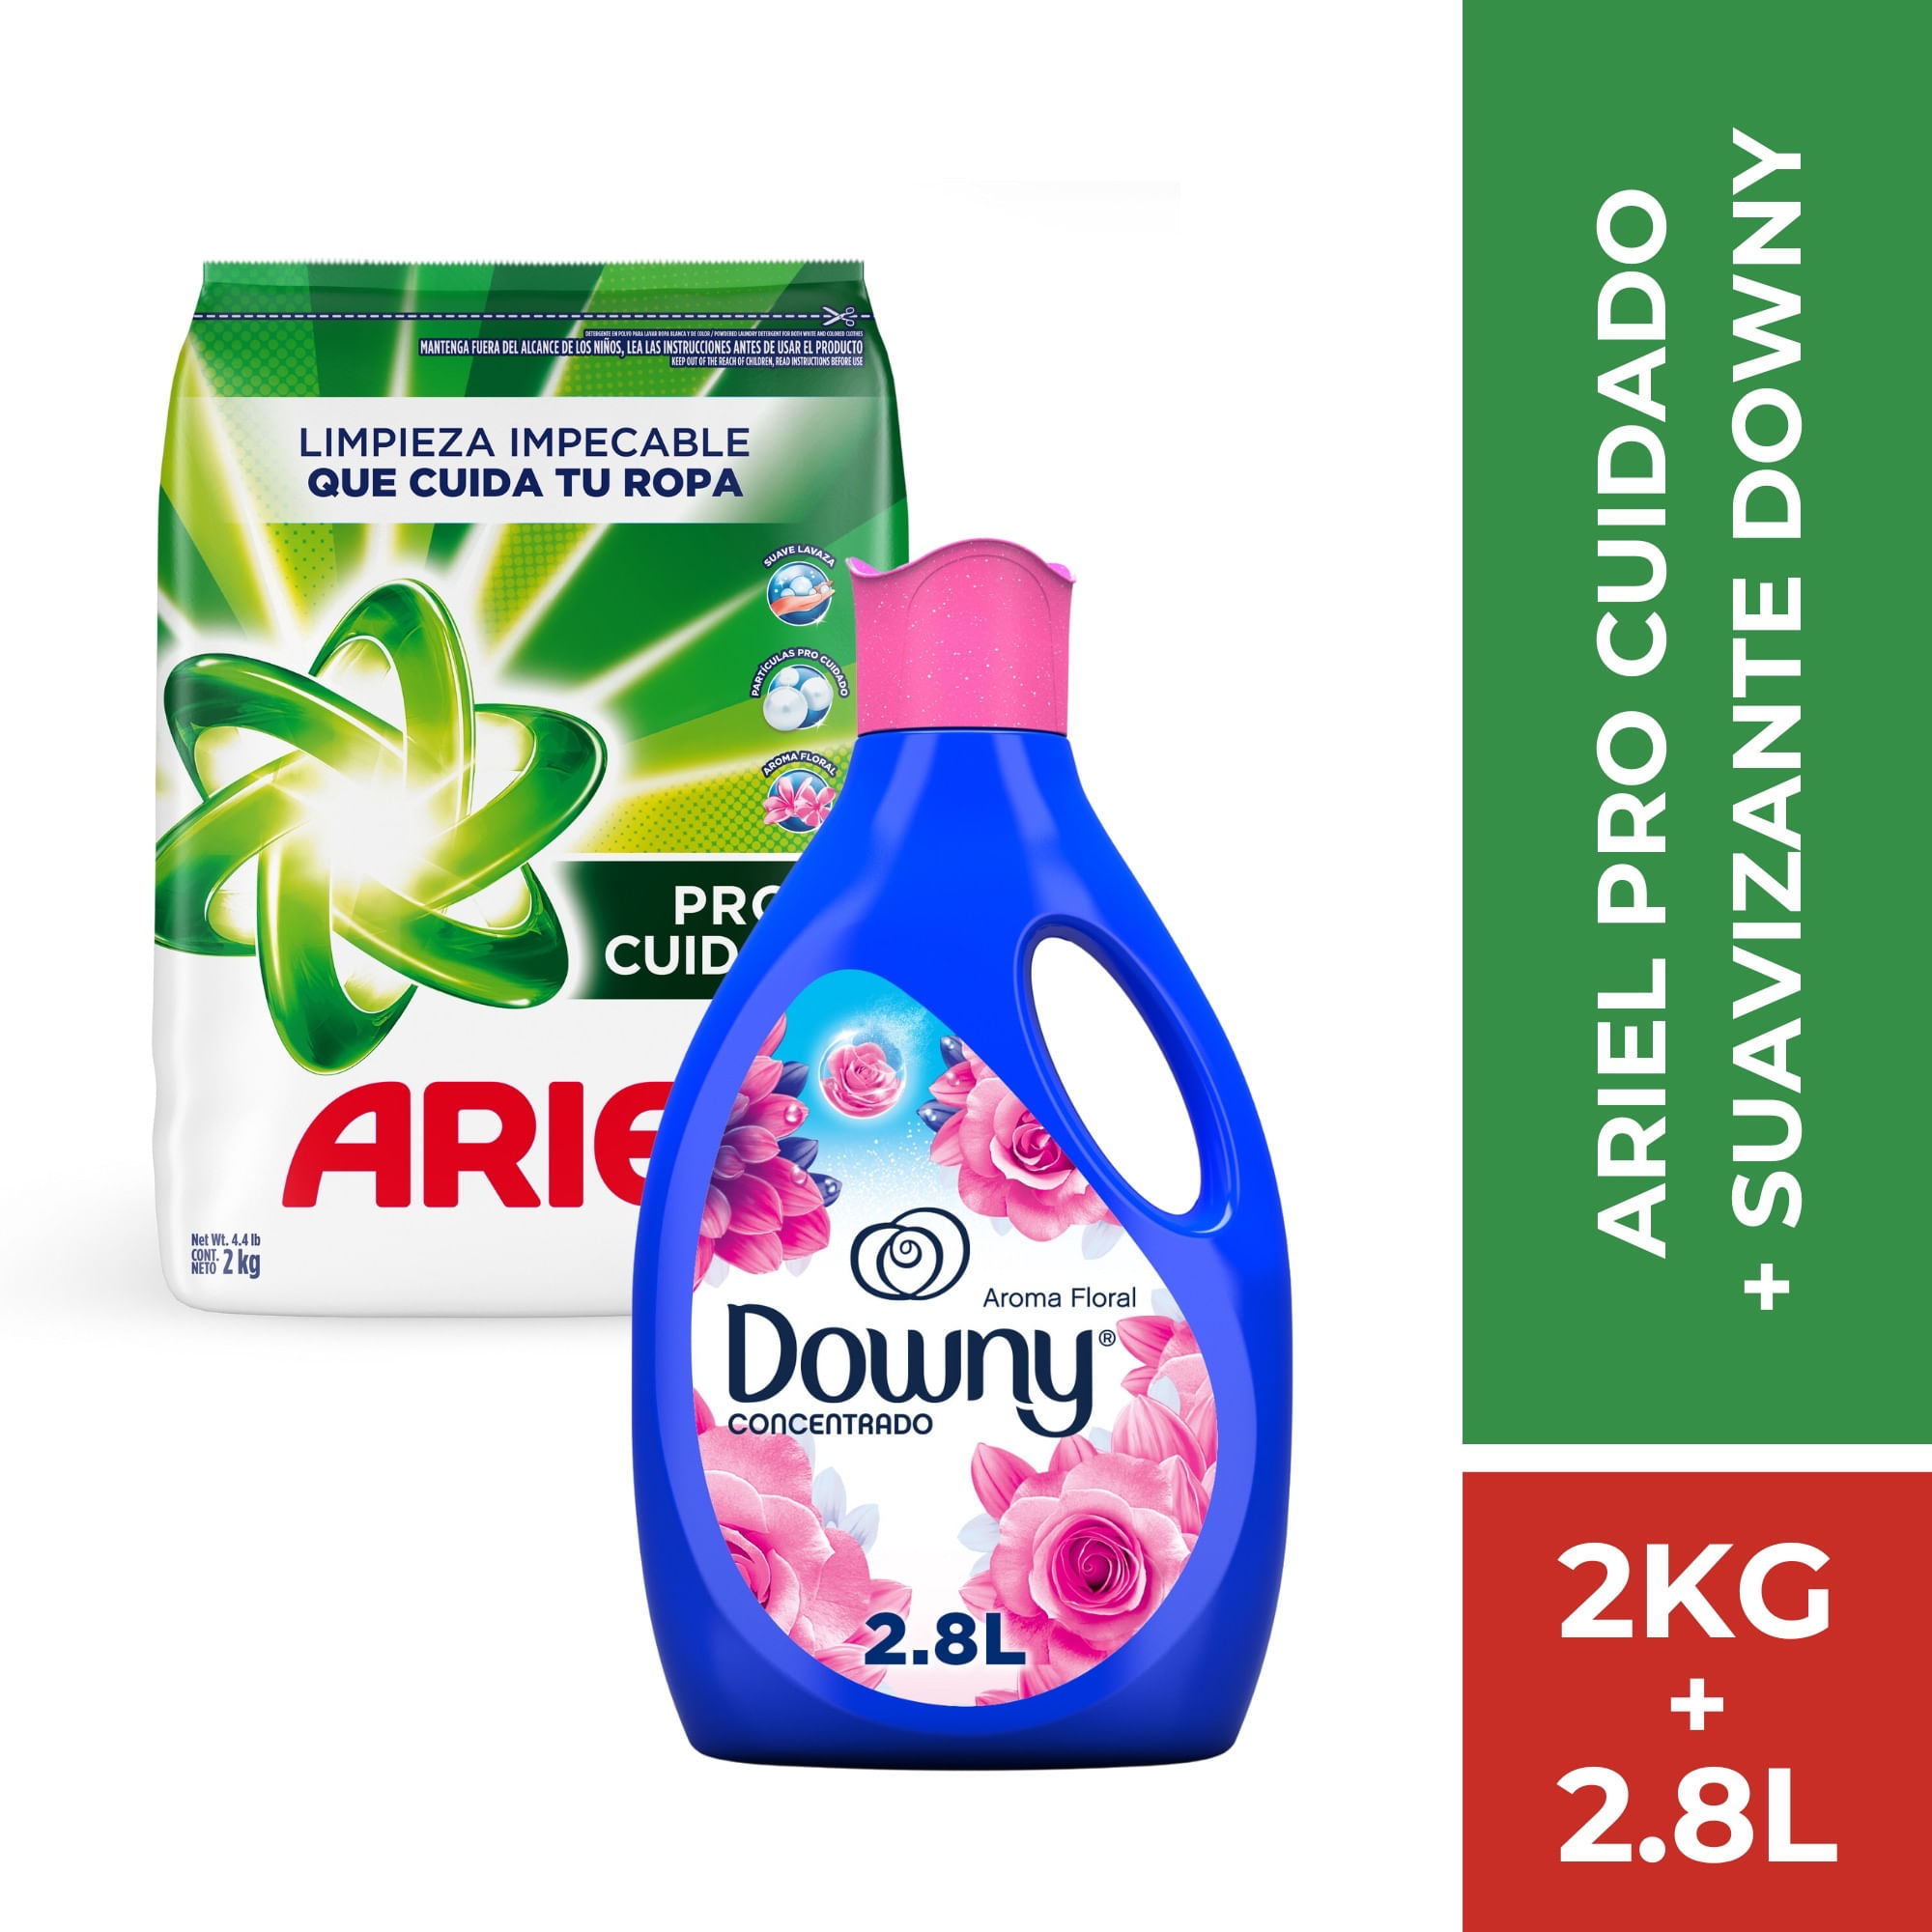 Pack Detergente Ariel Pro Cuidado 2 kg + Suavizante Downy Floral 2.8 L